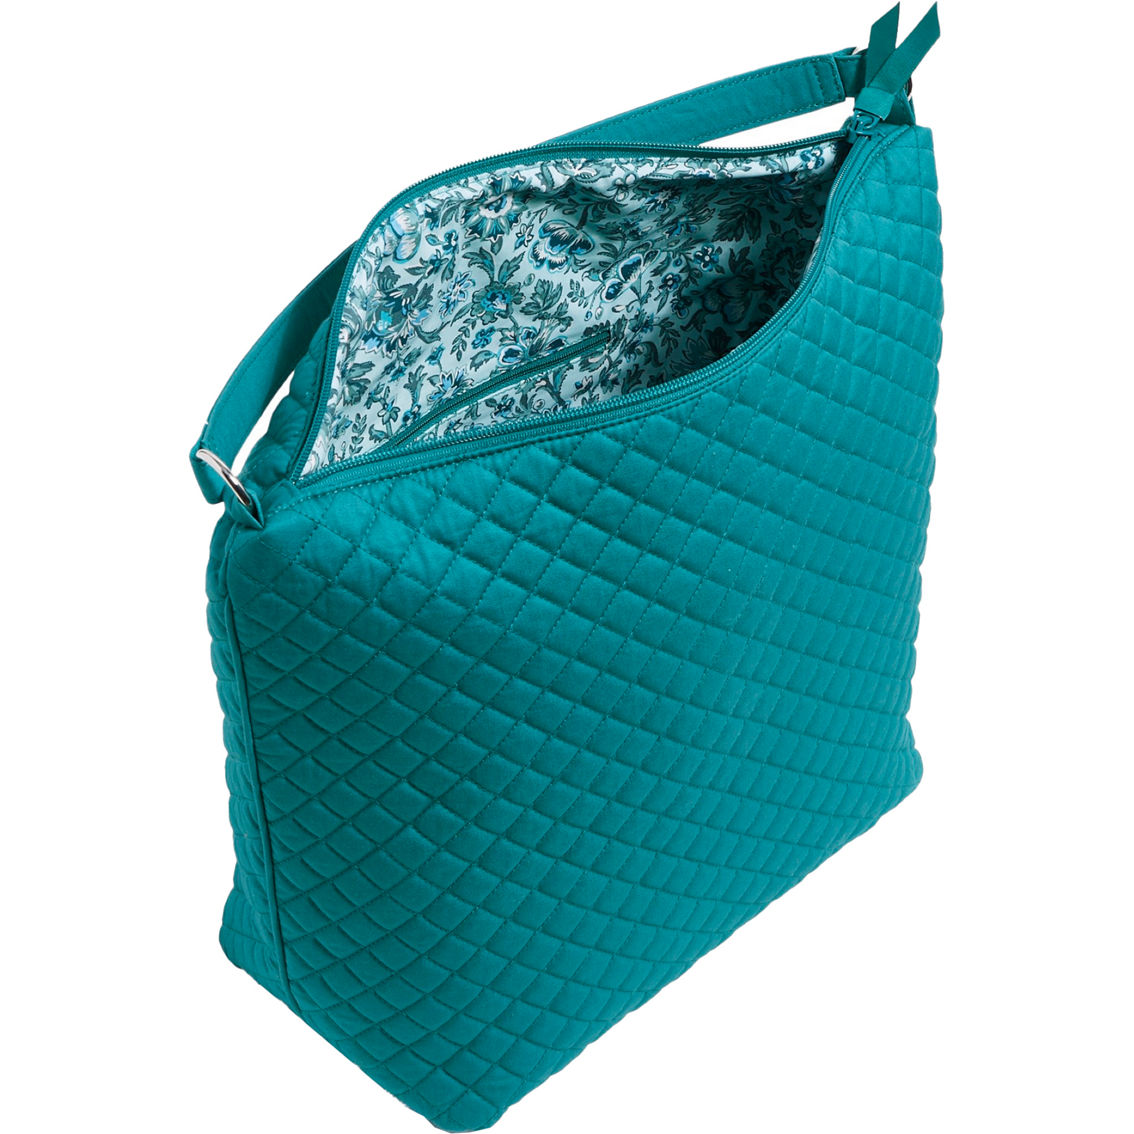 Vera Bradley Forever Green Oversize Hobo Shoulder Bag - Image 2 of 3